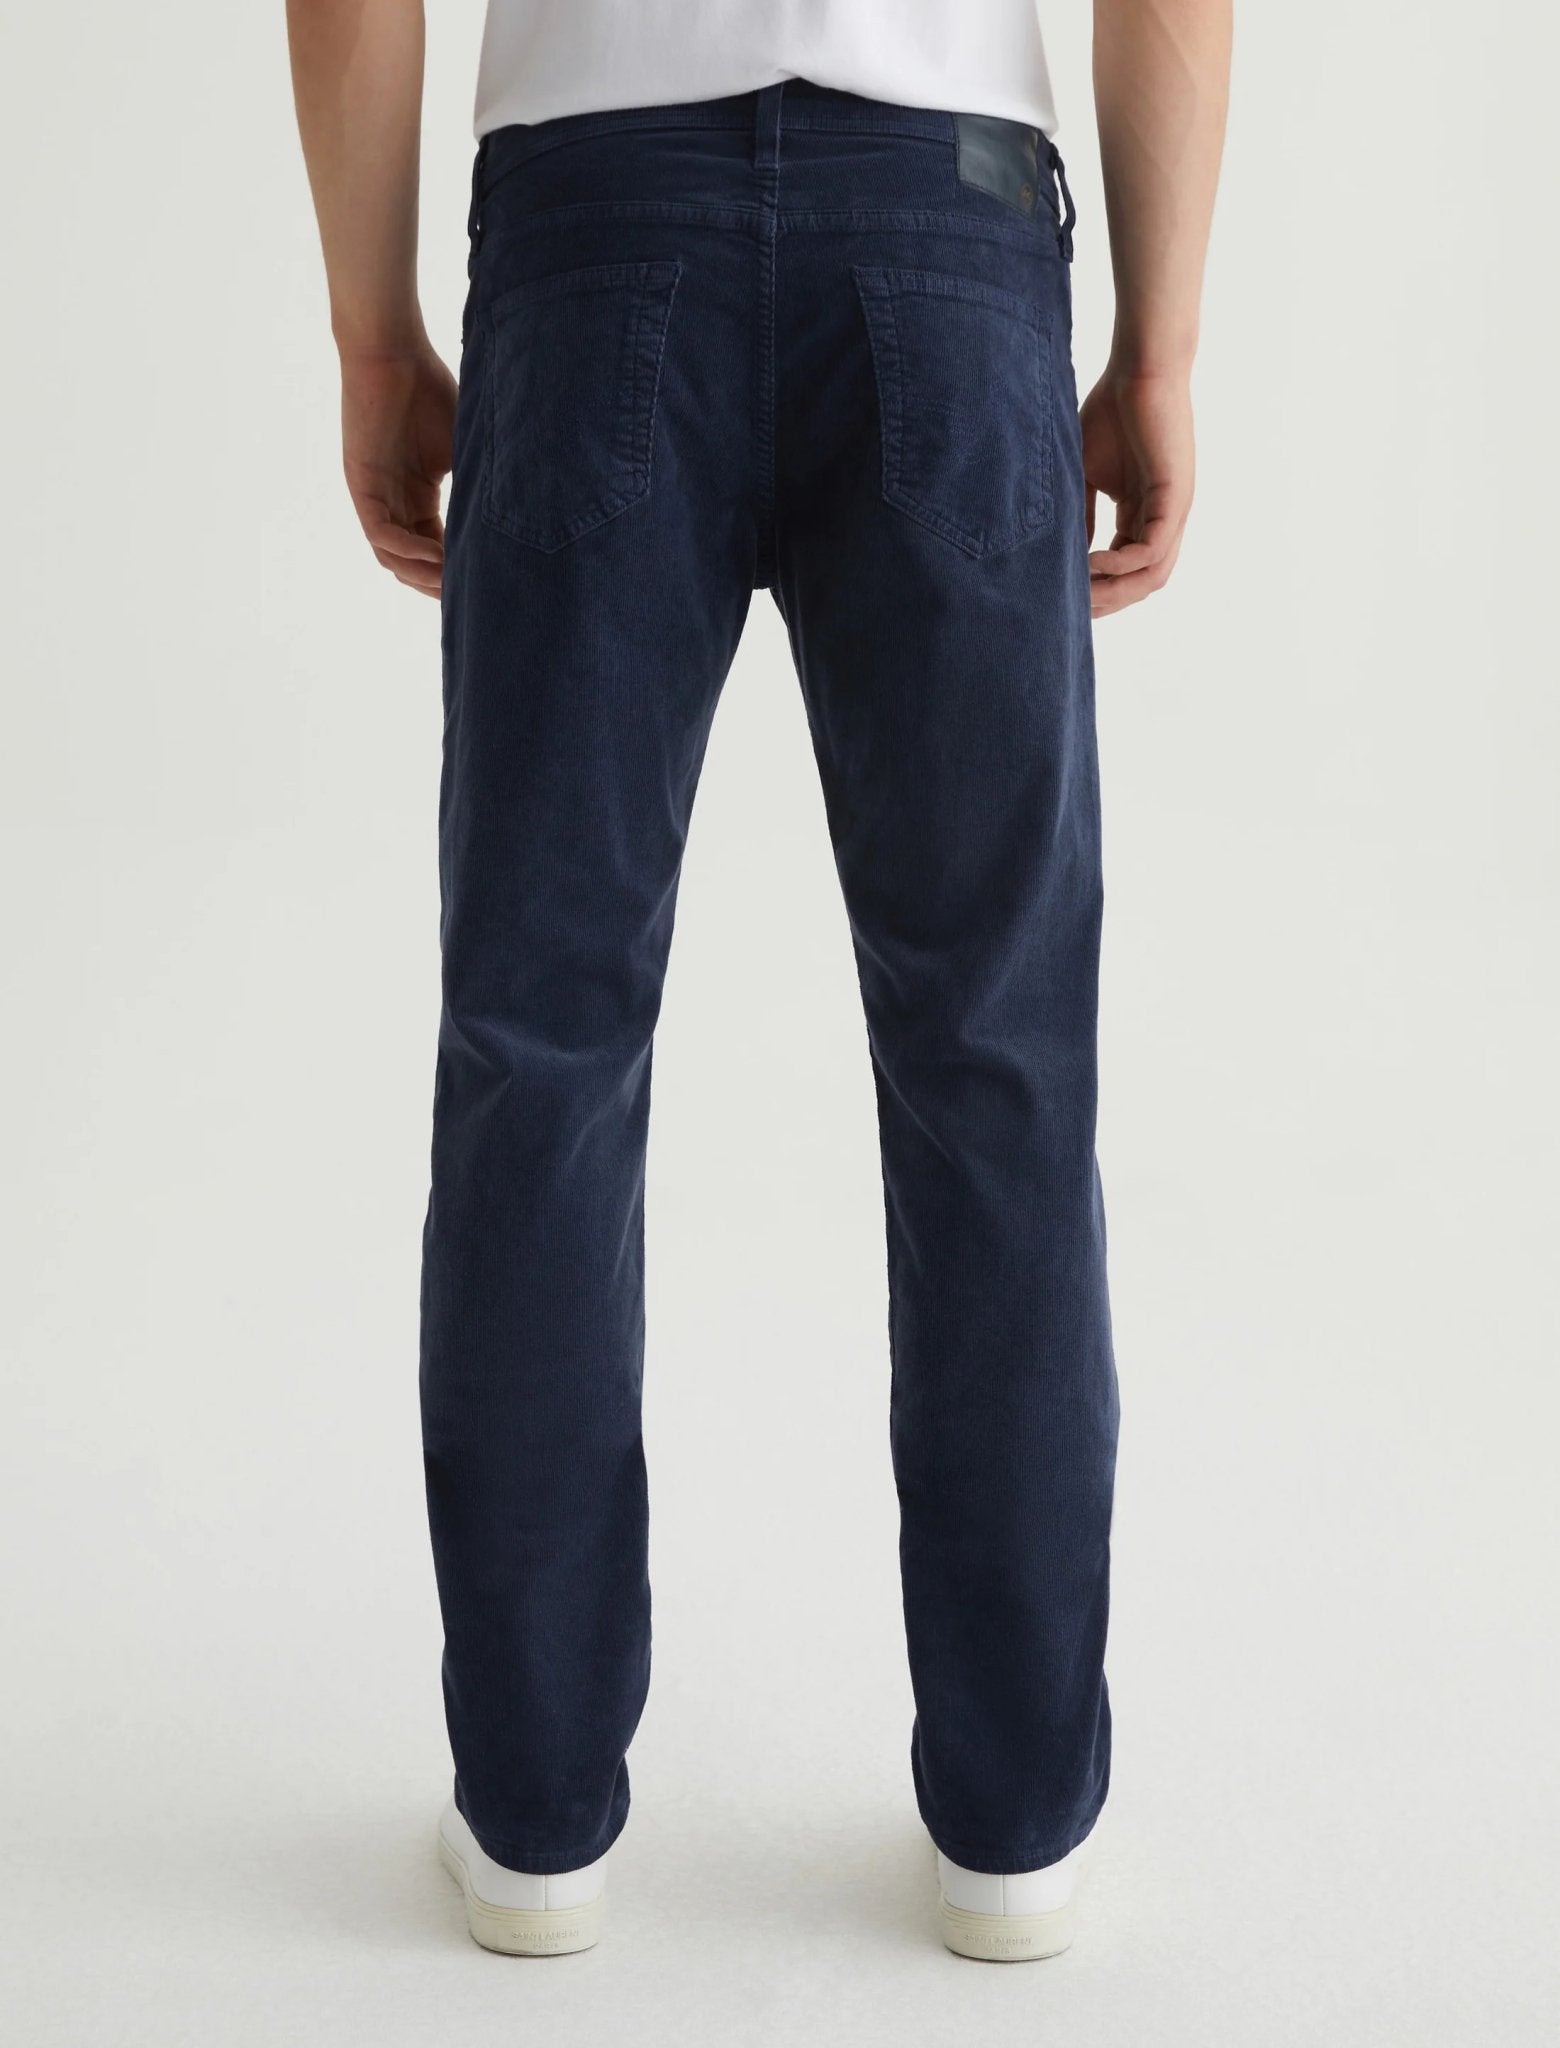 Tellis Modern Slim Cord Pants - AG Jeans - Danali - 1783RGCSLOSTO-SOSM-31